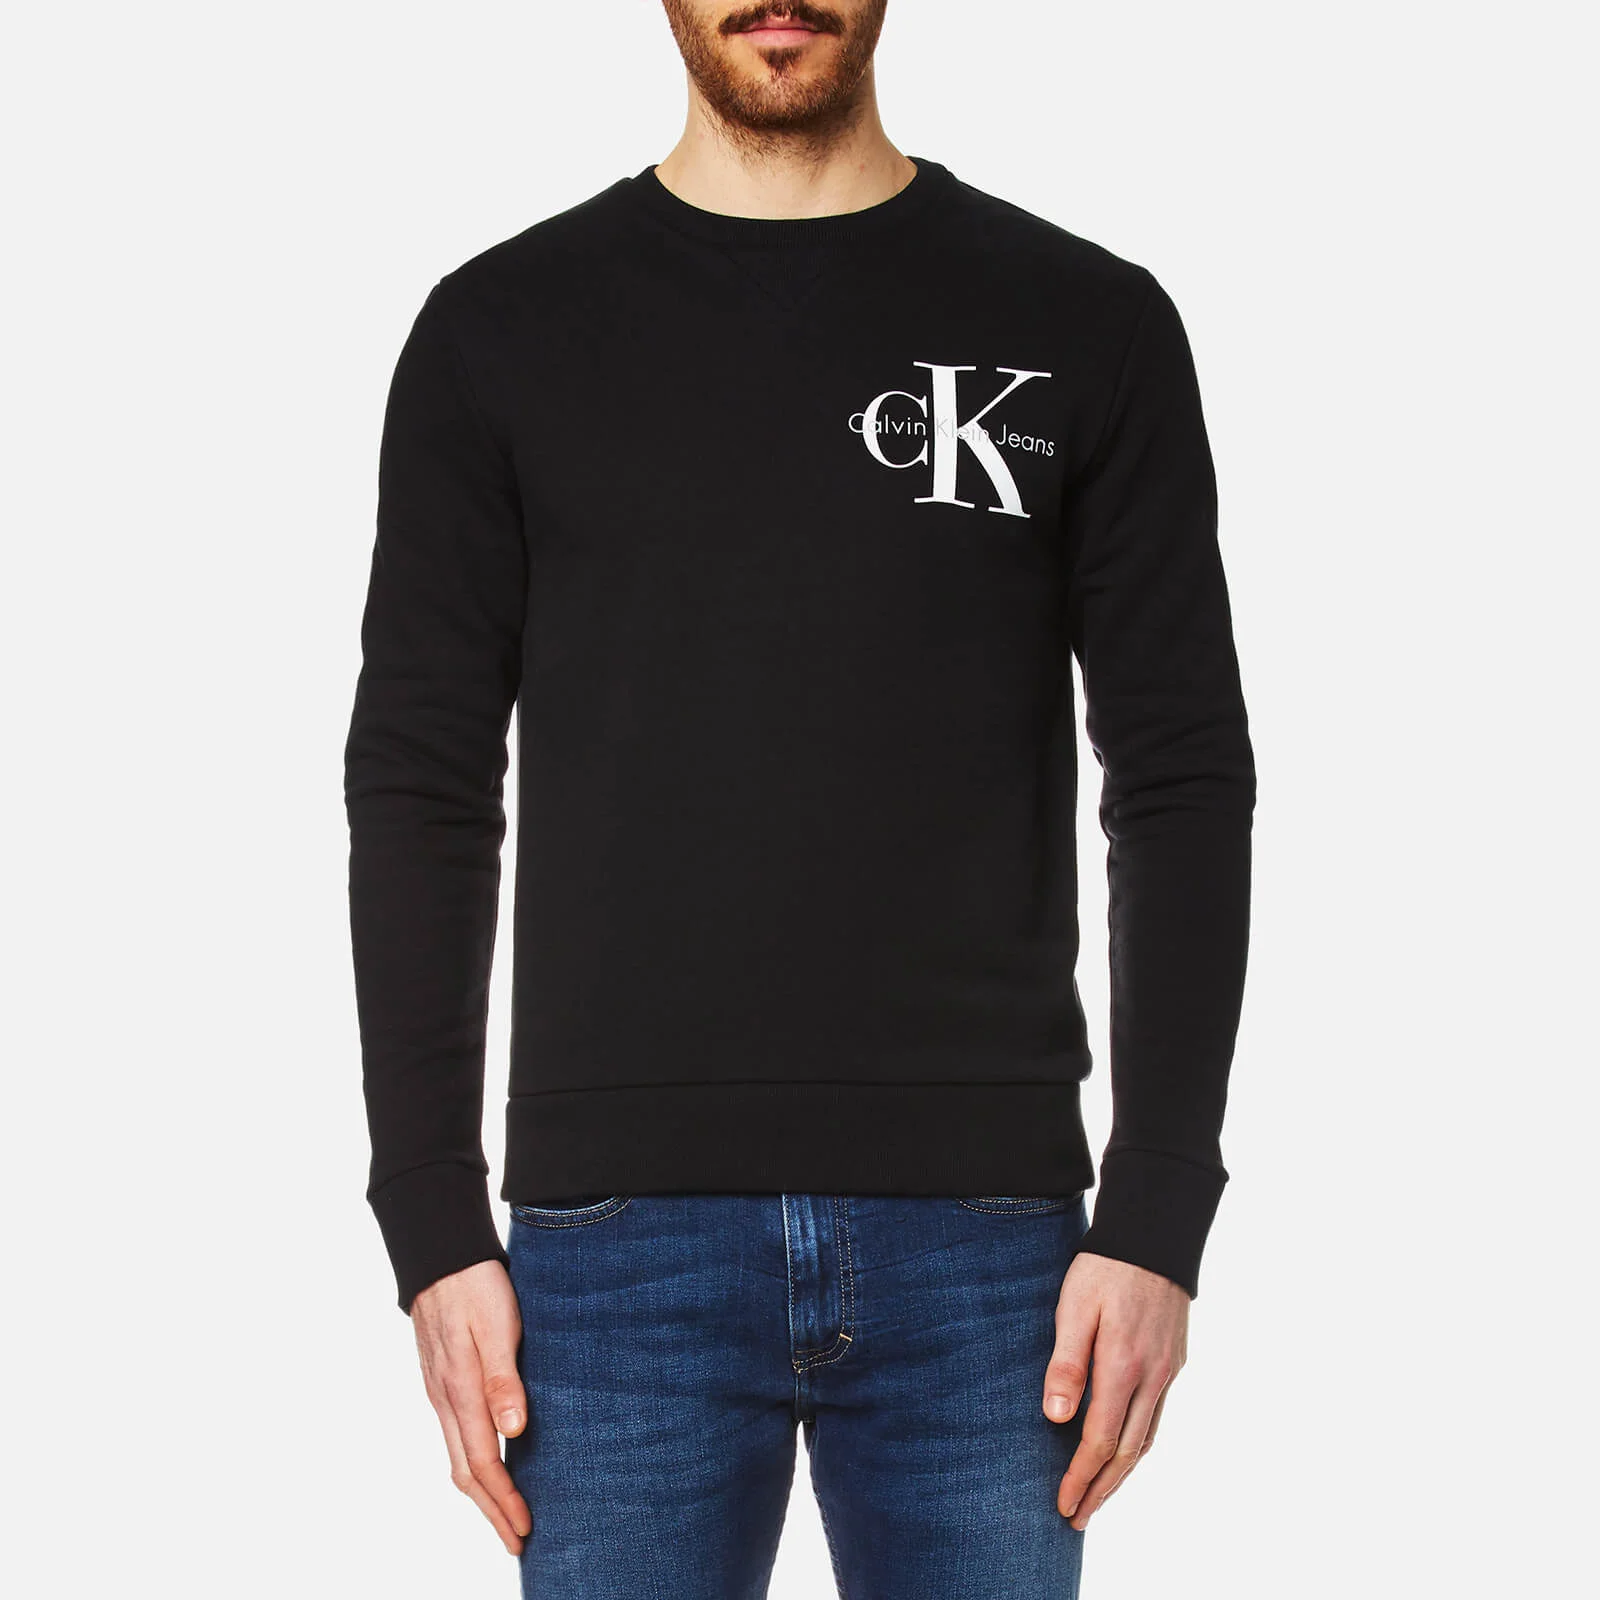 Calvin Klein Men's Haro True Icon Sweatshirt - Black Image 1